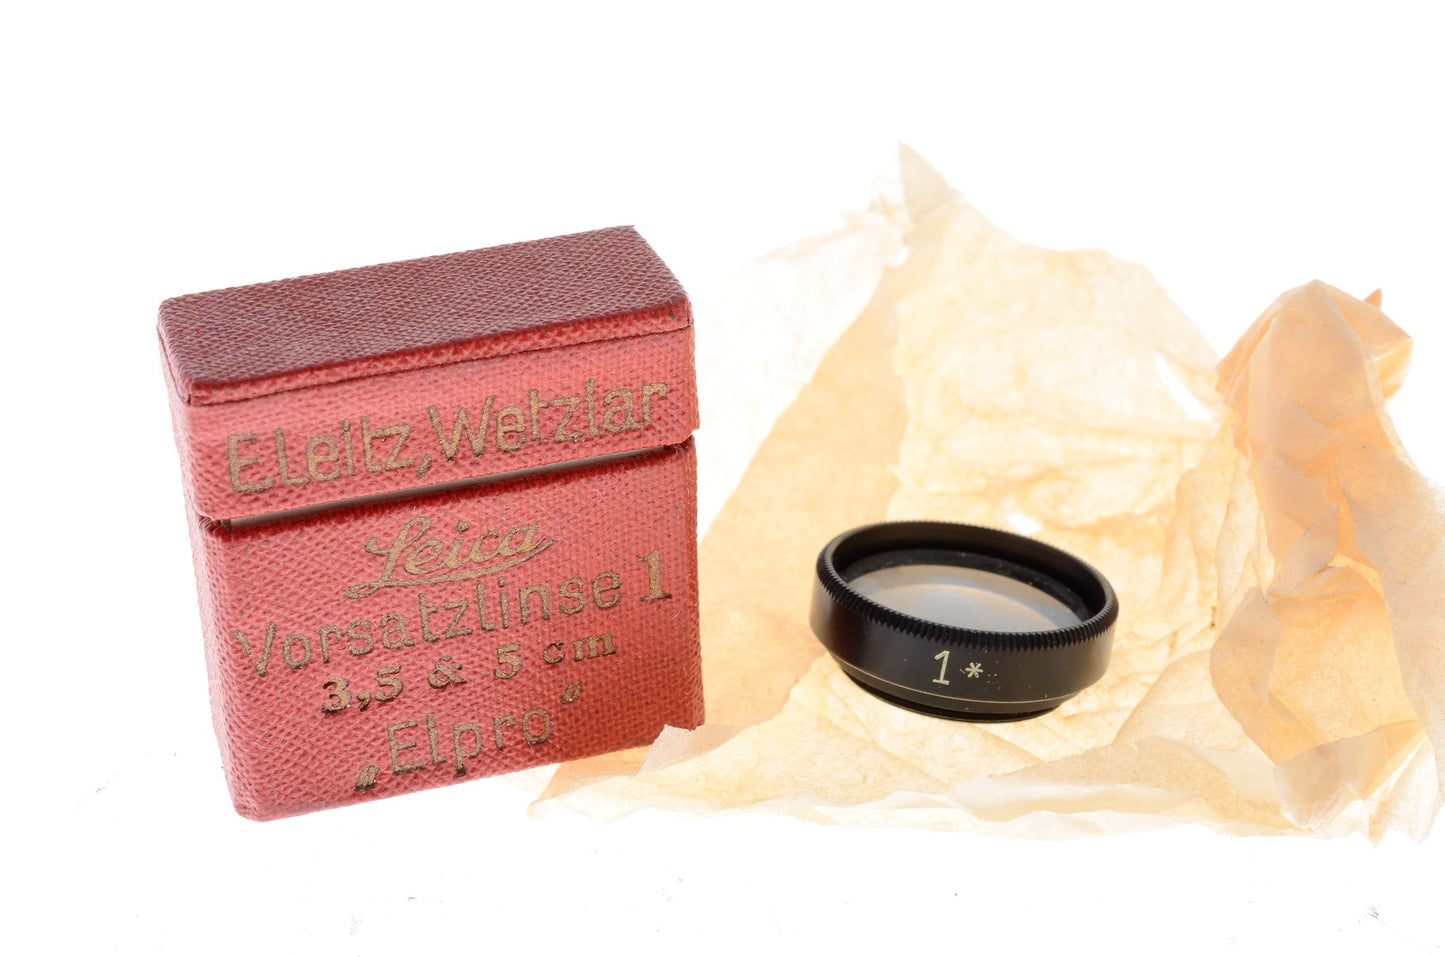 Leica Vorsatzlinse 1 3.5 & 5cm "Elpro" - Accessory